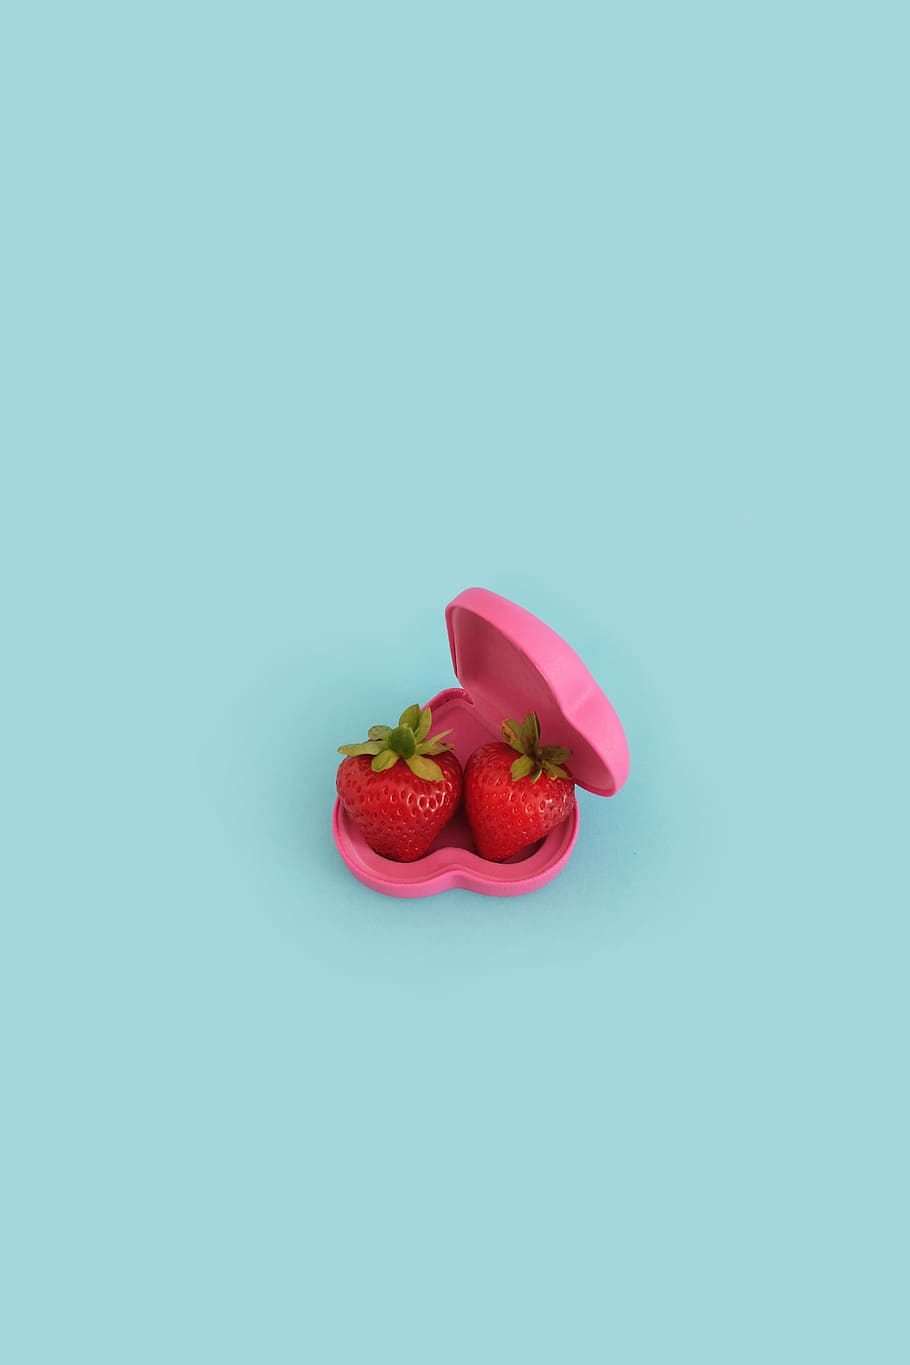 Strawberries Art iPhone Wallpapers Free Download